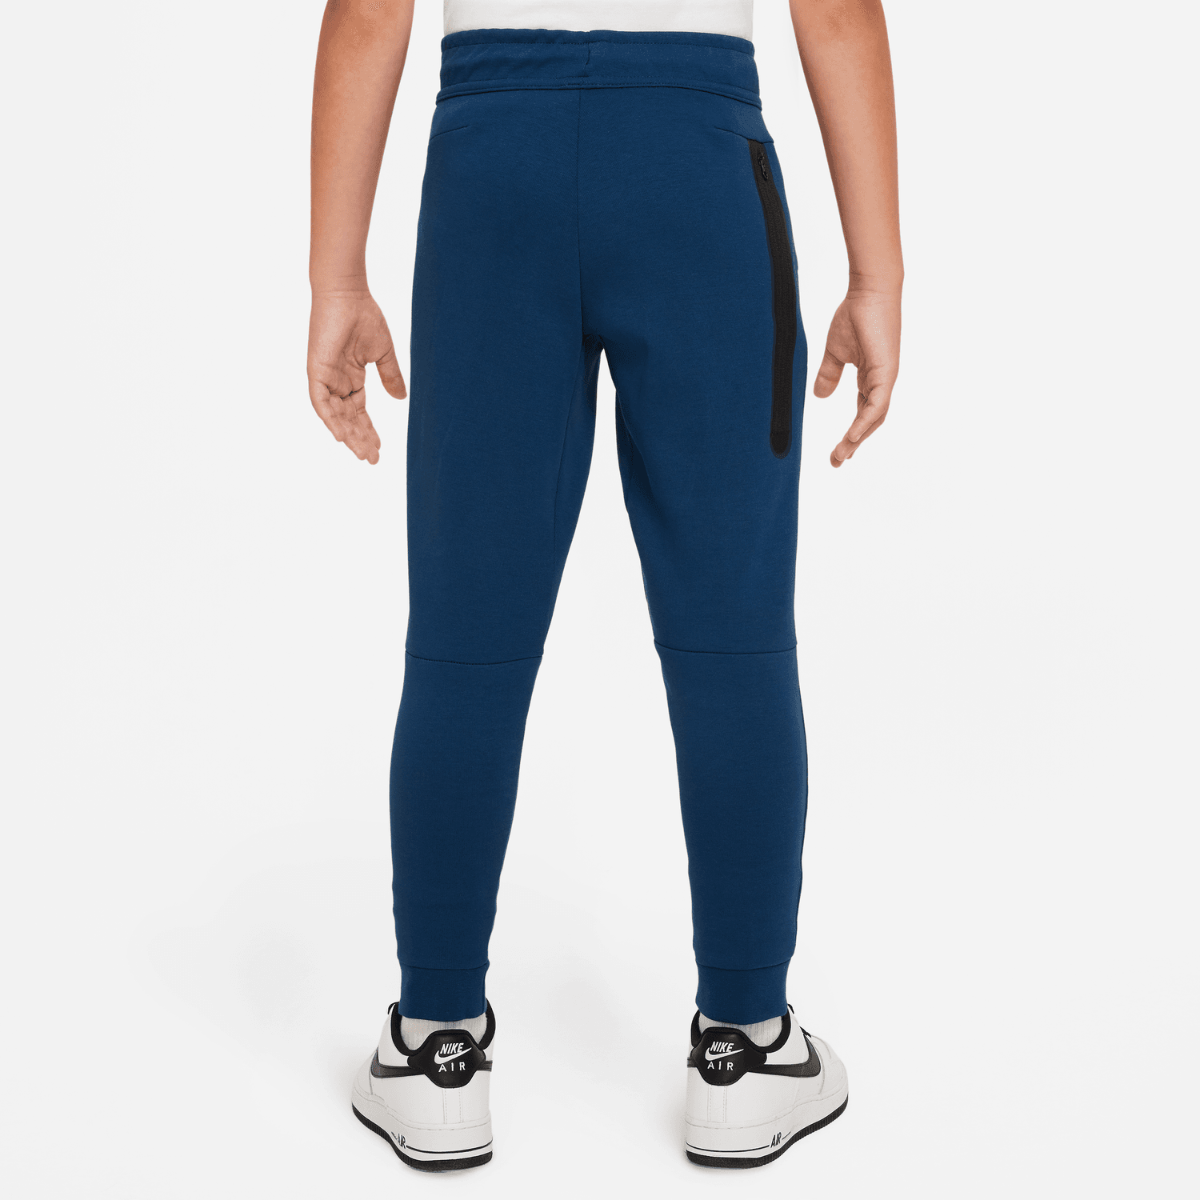 Joggers Nike Tech Fleece Junior - Azul marino/Negro